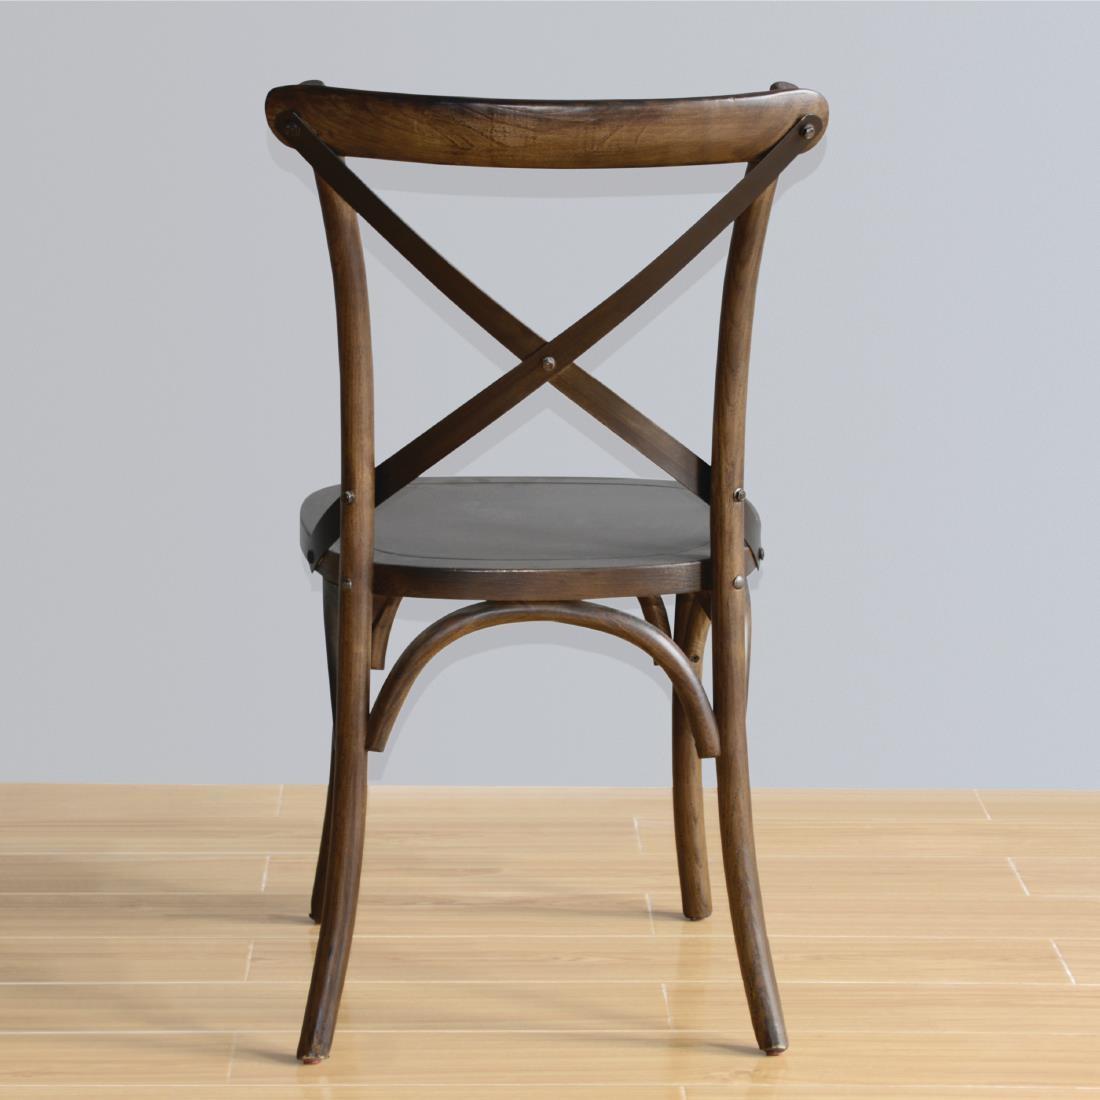 GG658 - Bolero Wooden Dining Chair with Metal Cross Backrest (Walnut Finish) (Pa - GG658  - 5